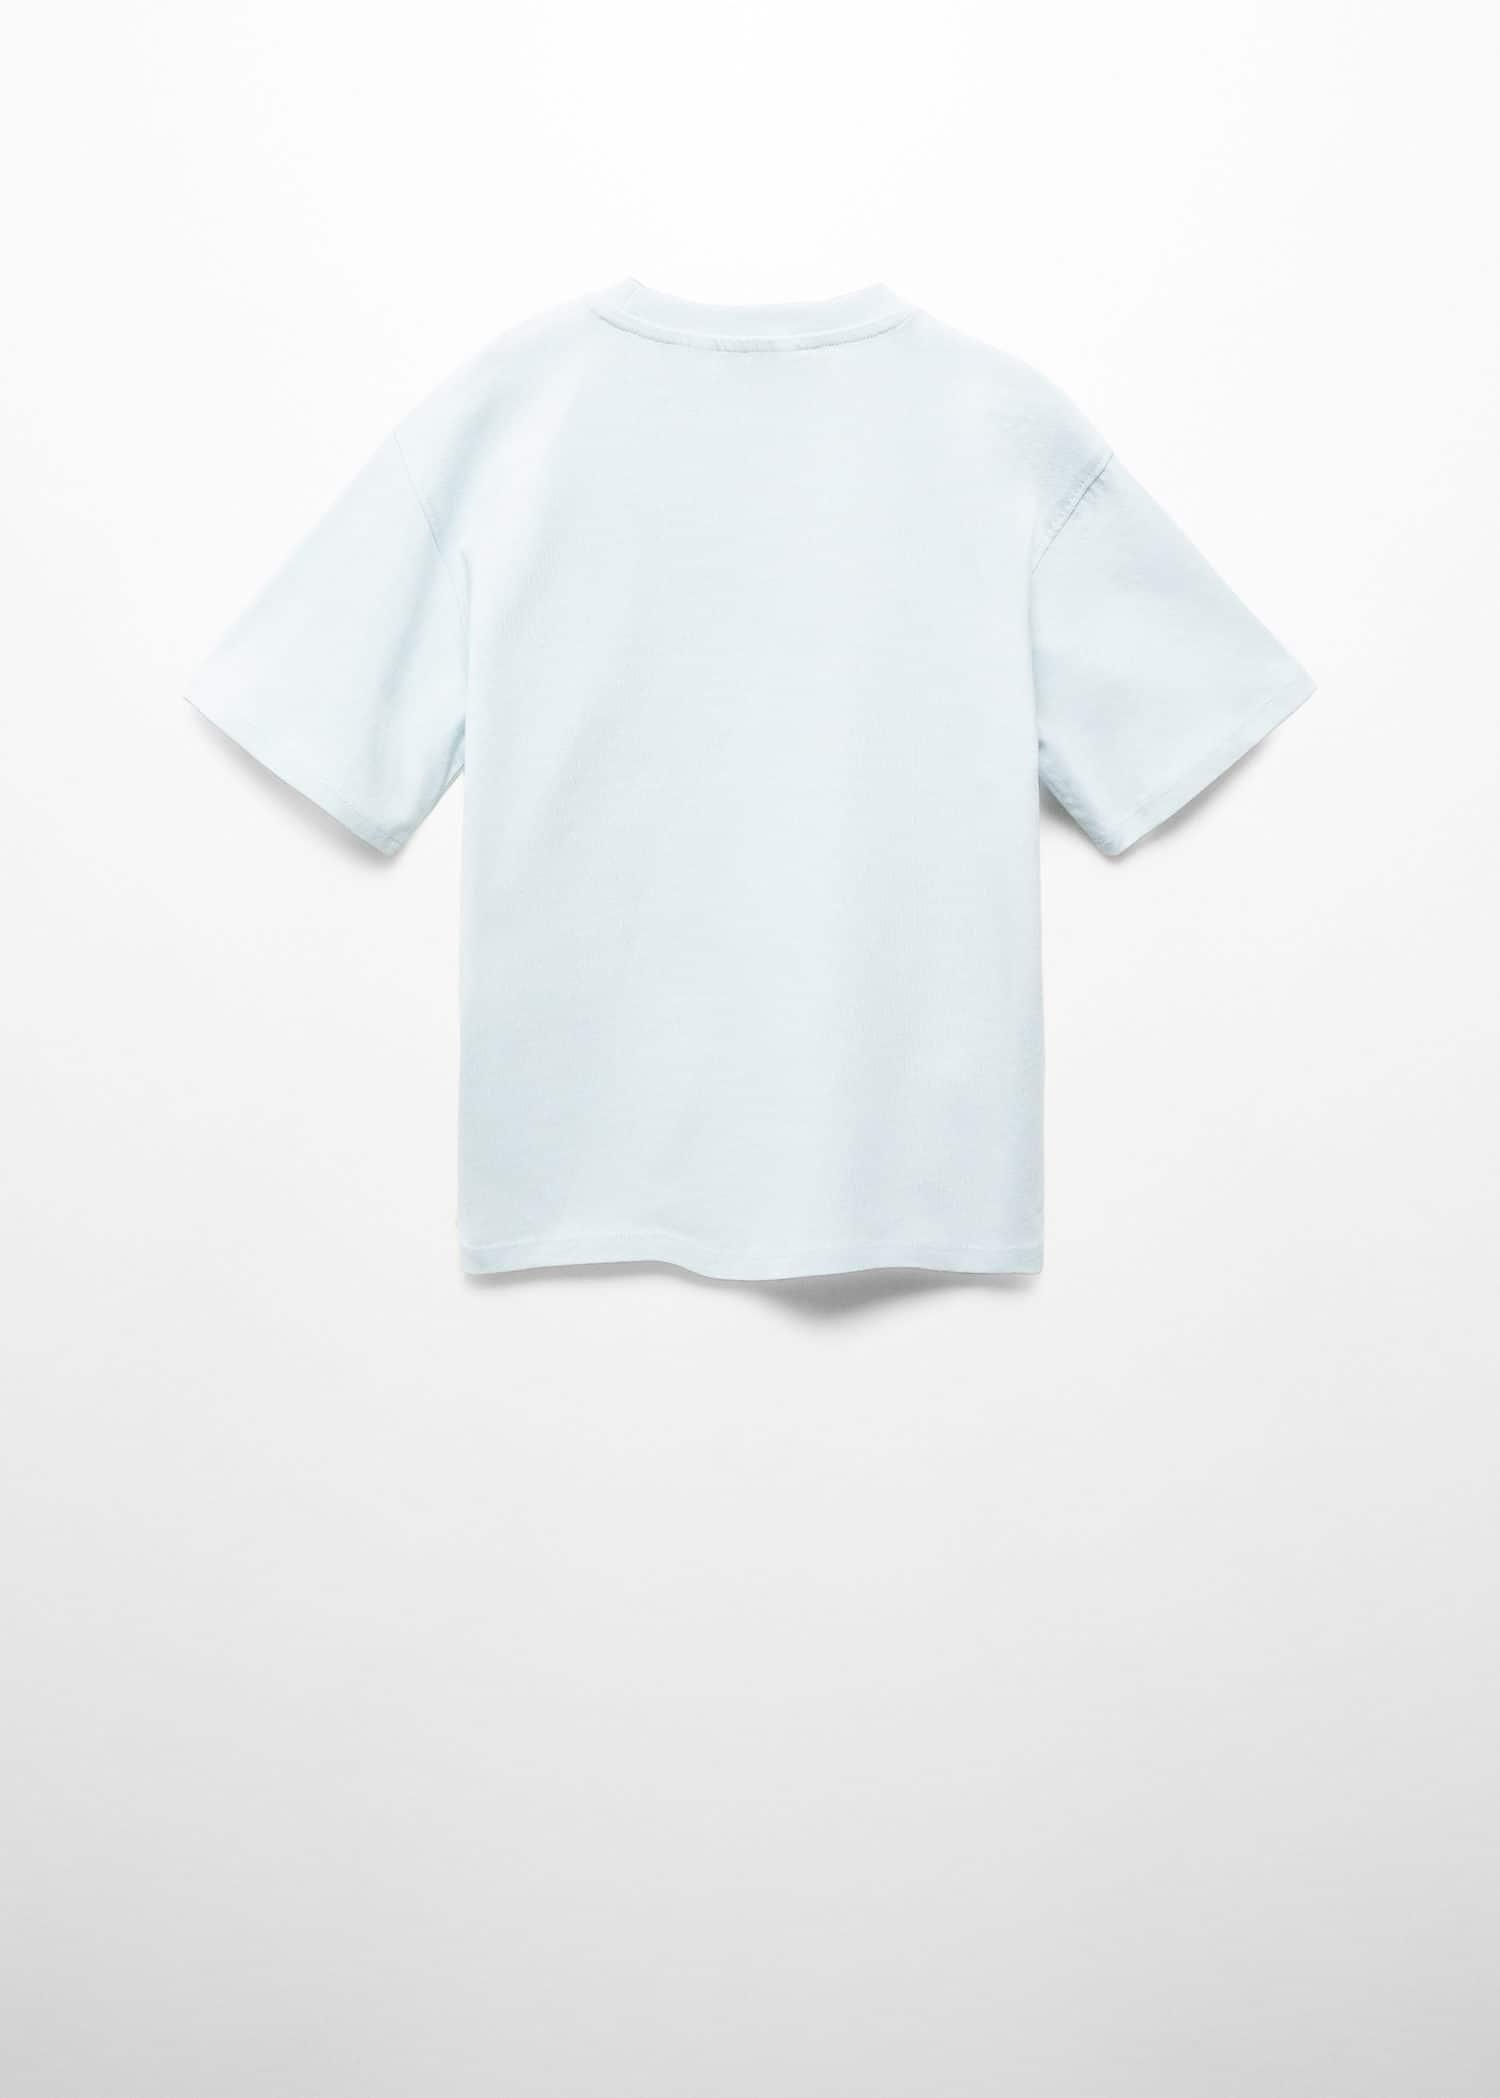 Mango - Blue Printed Cotton-Blend T-Shirt, Kids Boys